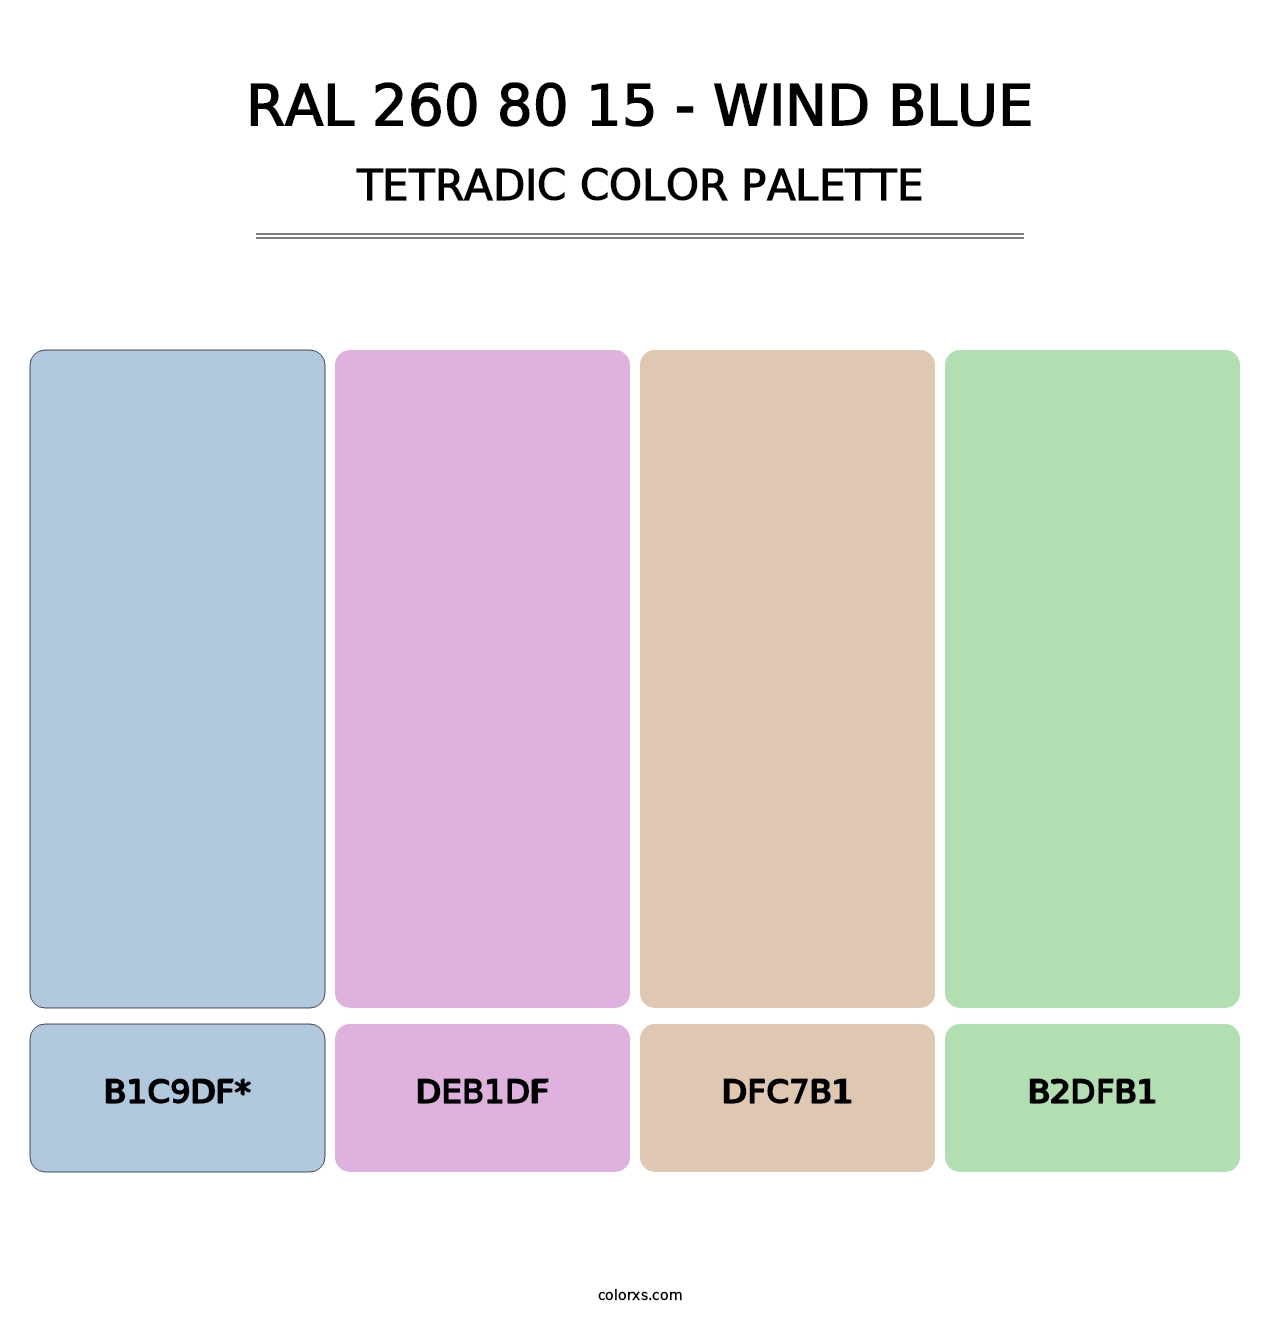 RAL 260 80 15 - Wind Blue - Tetradic Color Palette